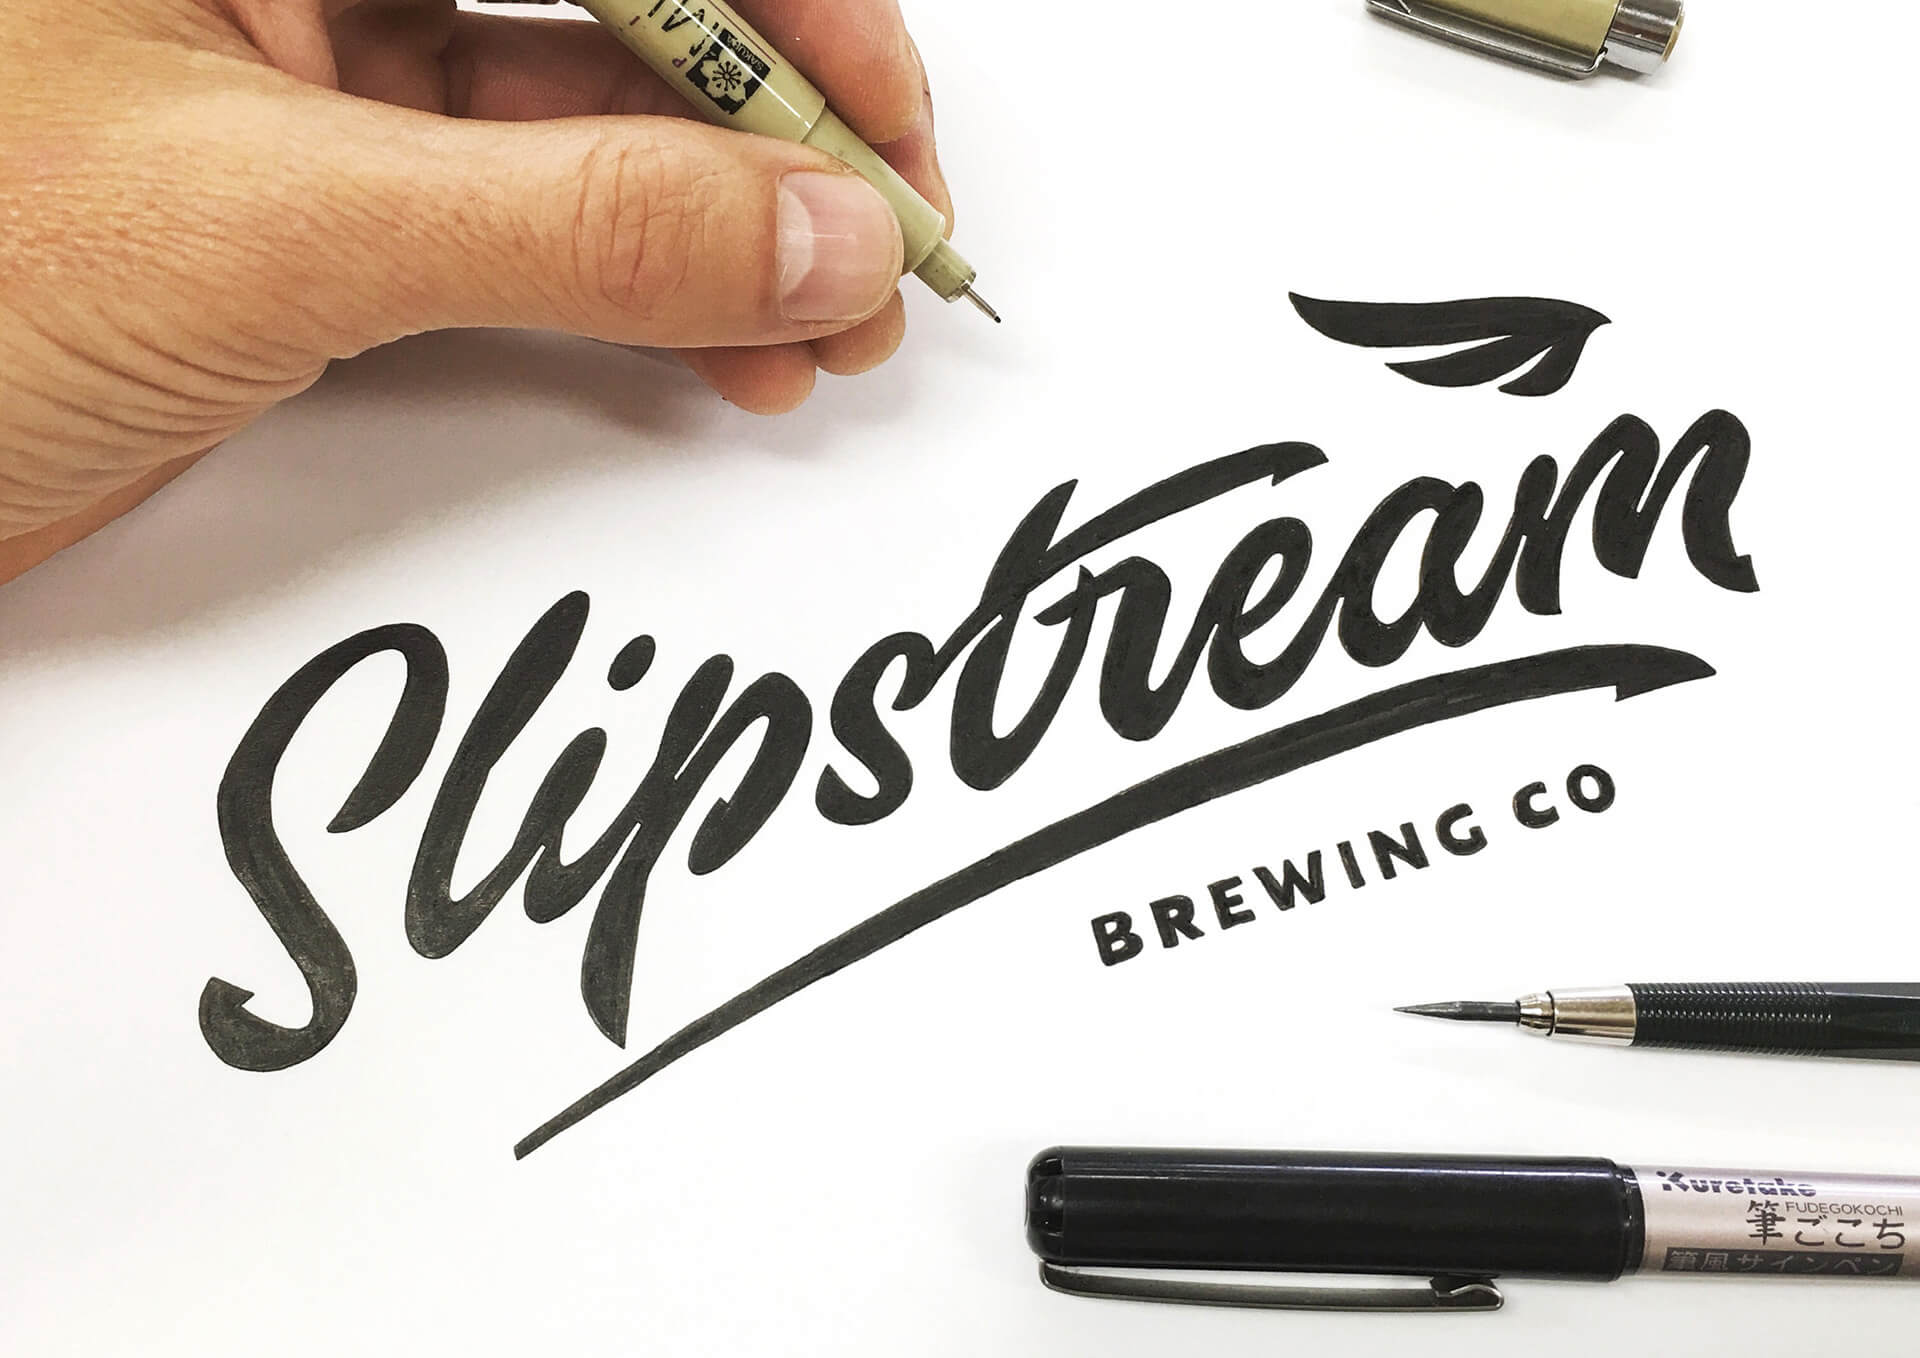 Slipstream精酿啤酒包装设计